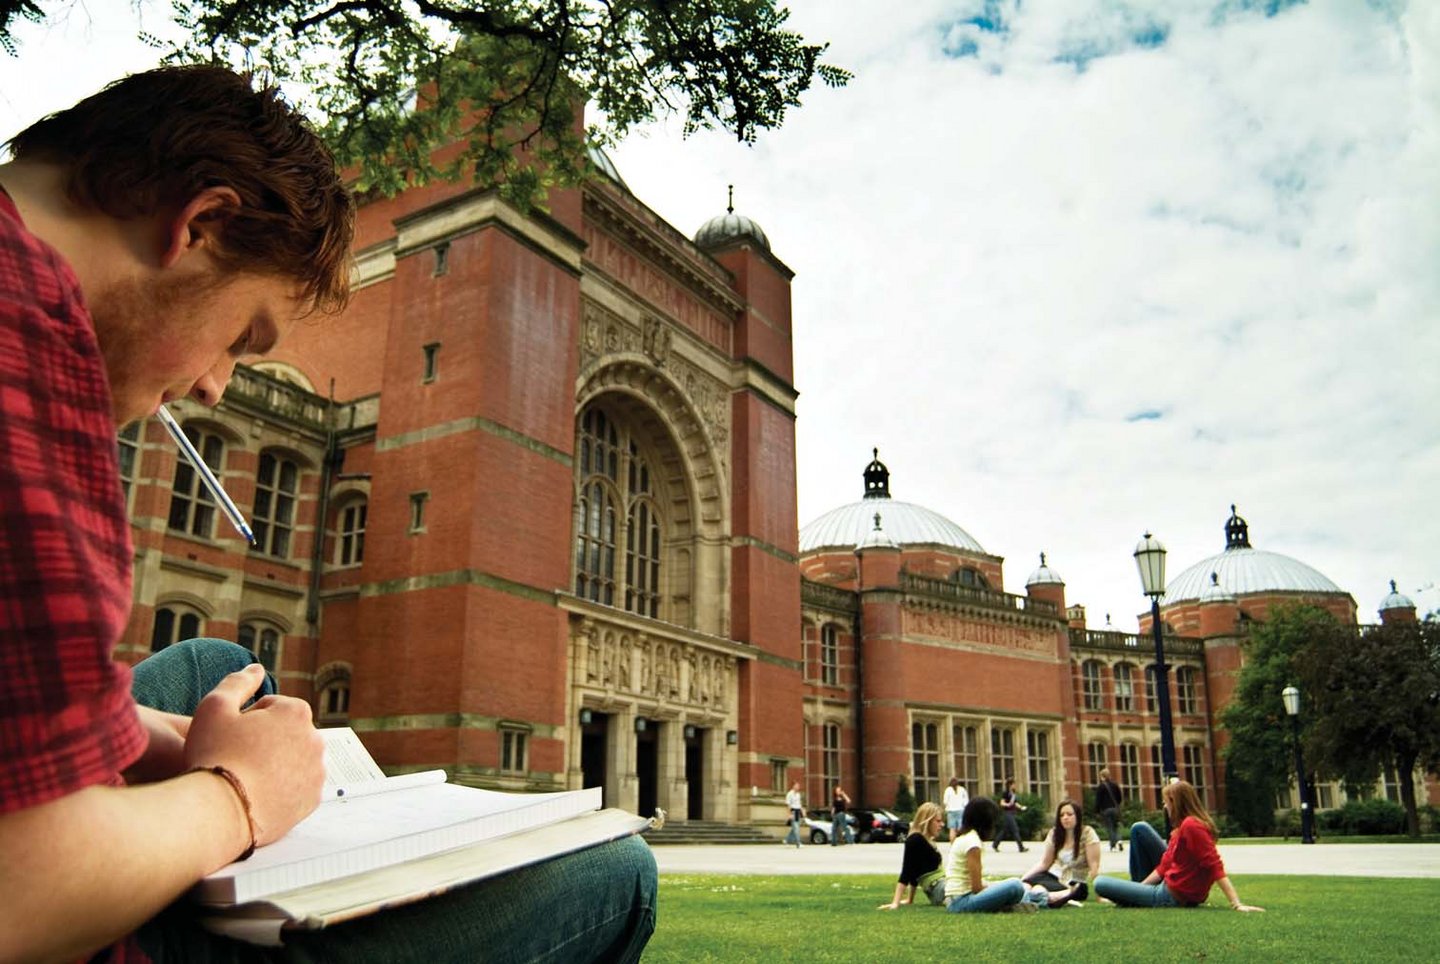 Student reading in front of University of Birmingham